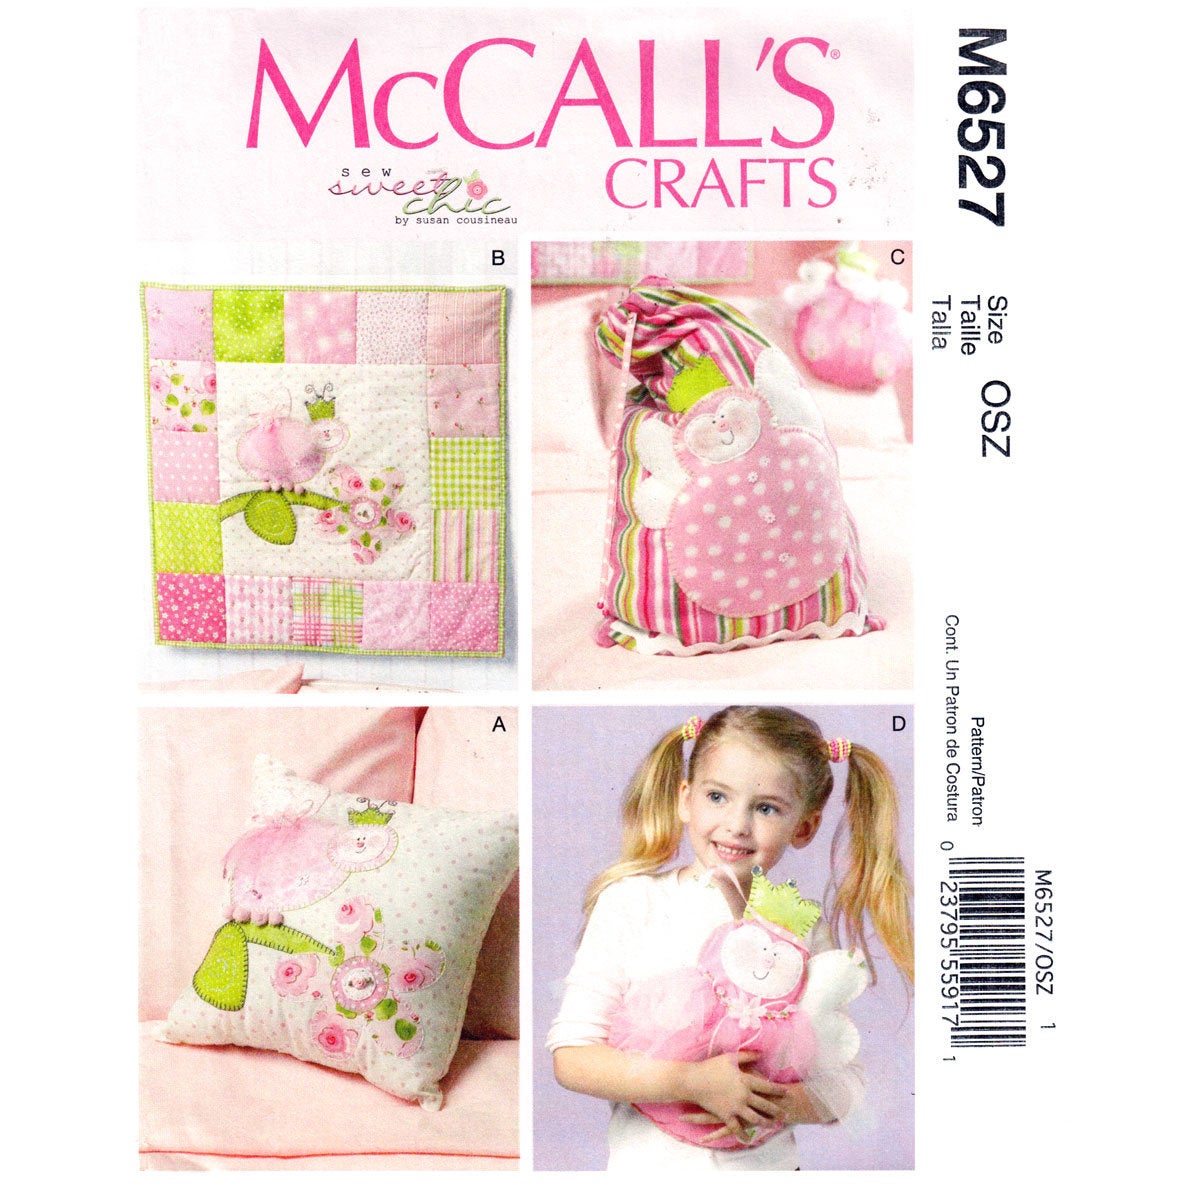 McCalls 6527 girls decor pattern